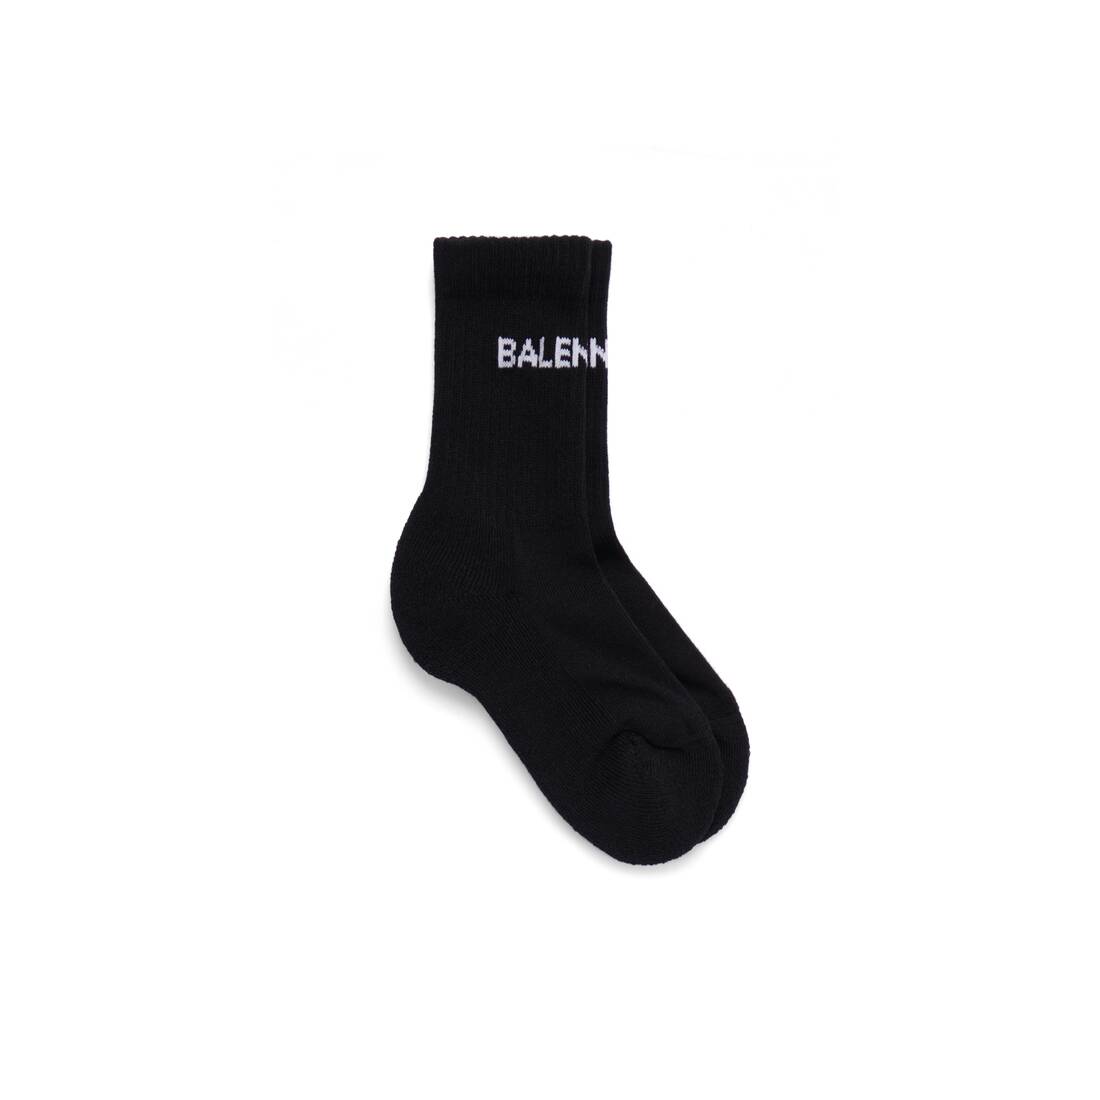 Kids - Balenciaga Tennis Socks in Black